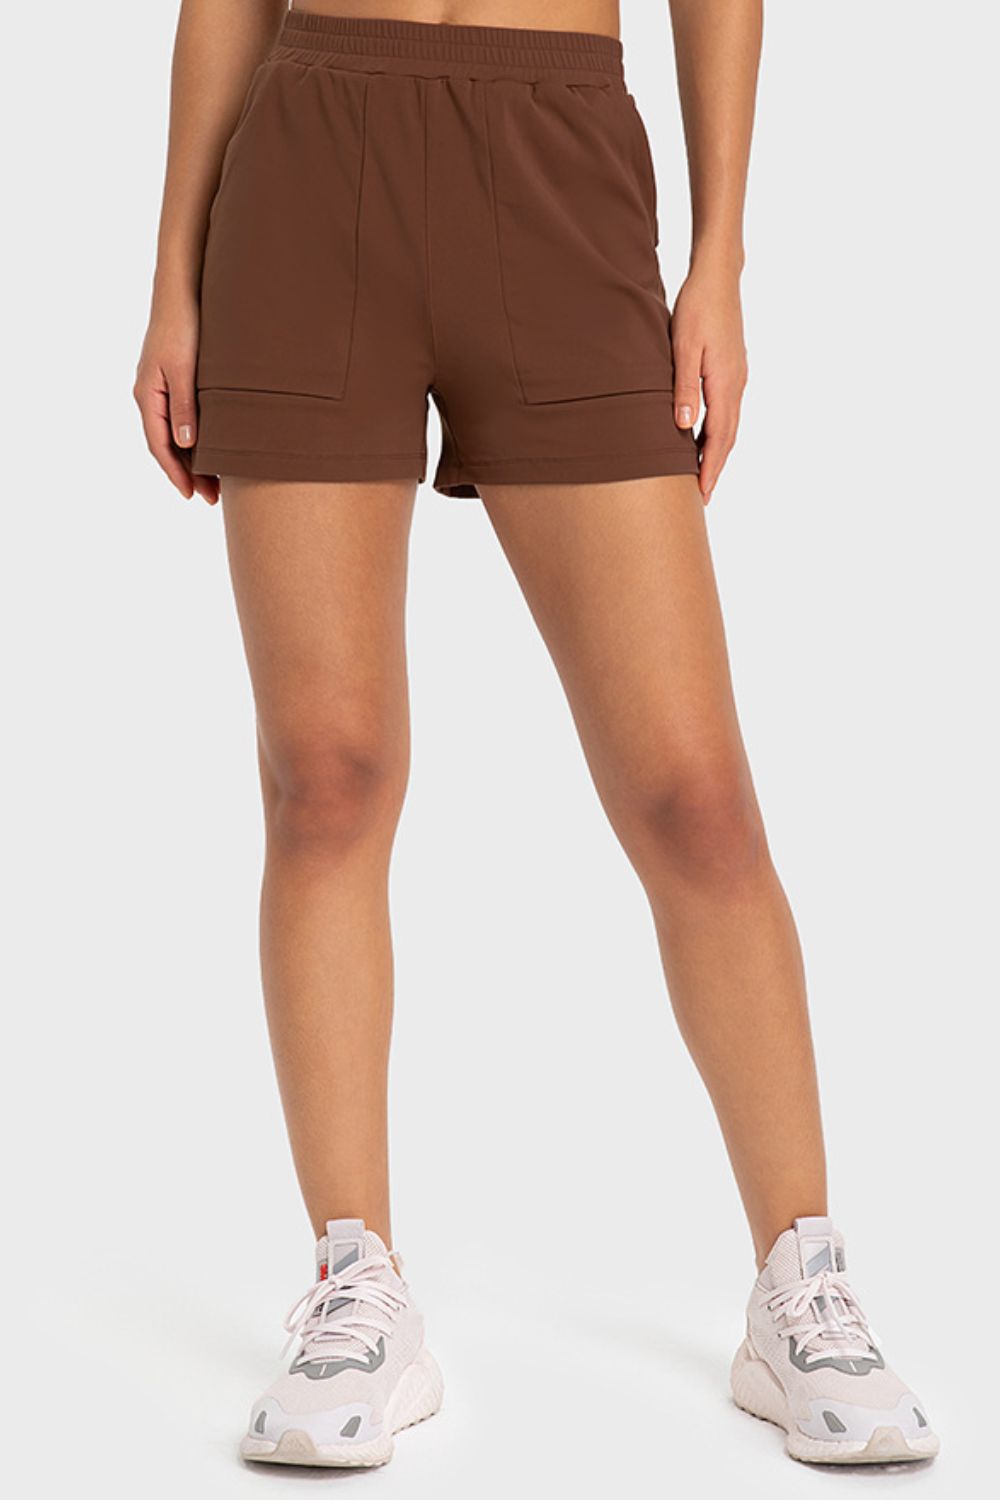 Women’s Elastic Waist Sports Shorts with Pockets